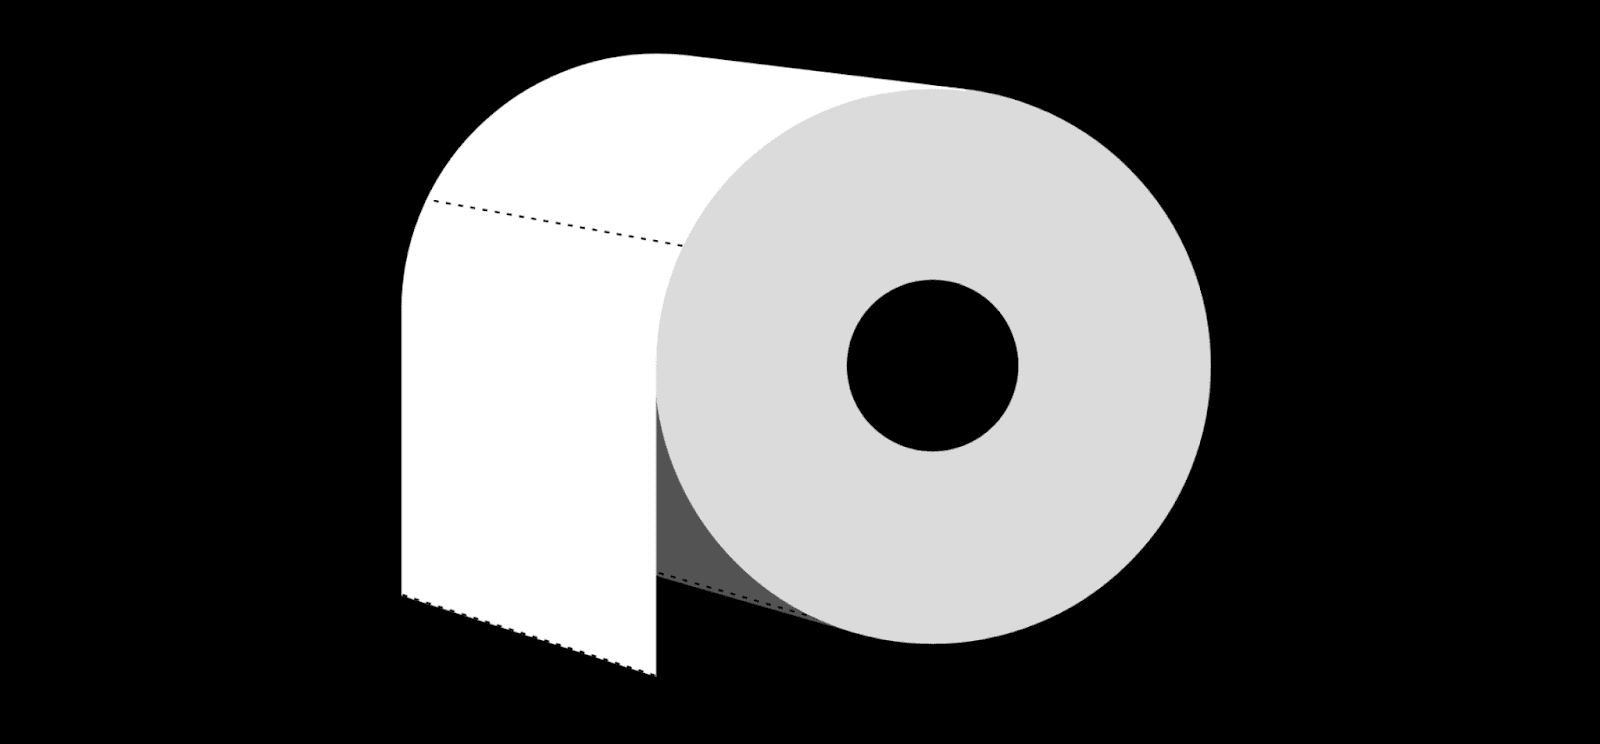 Useless Paper Toilet website